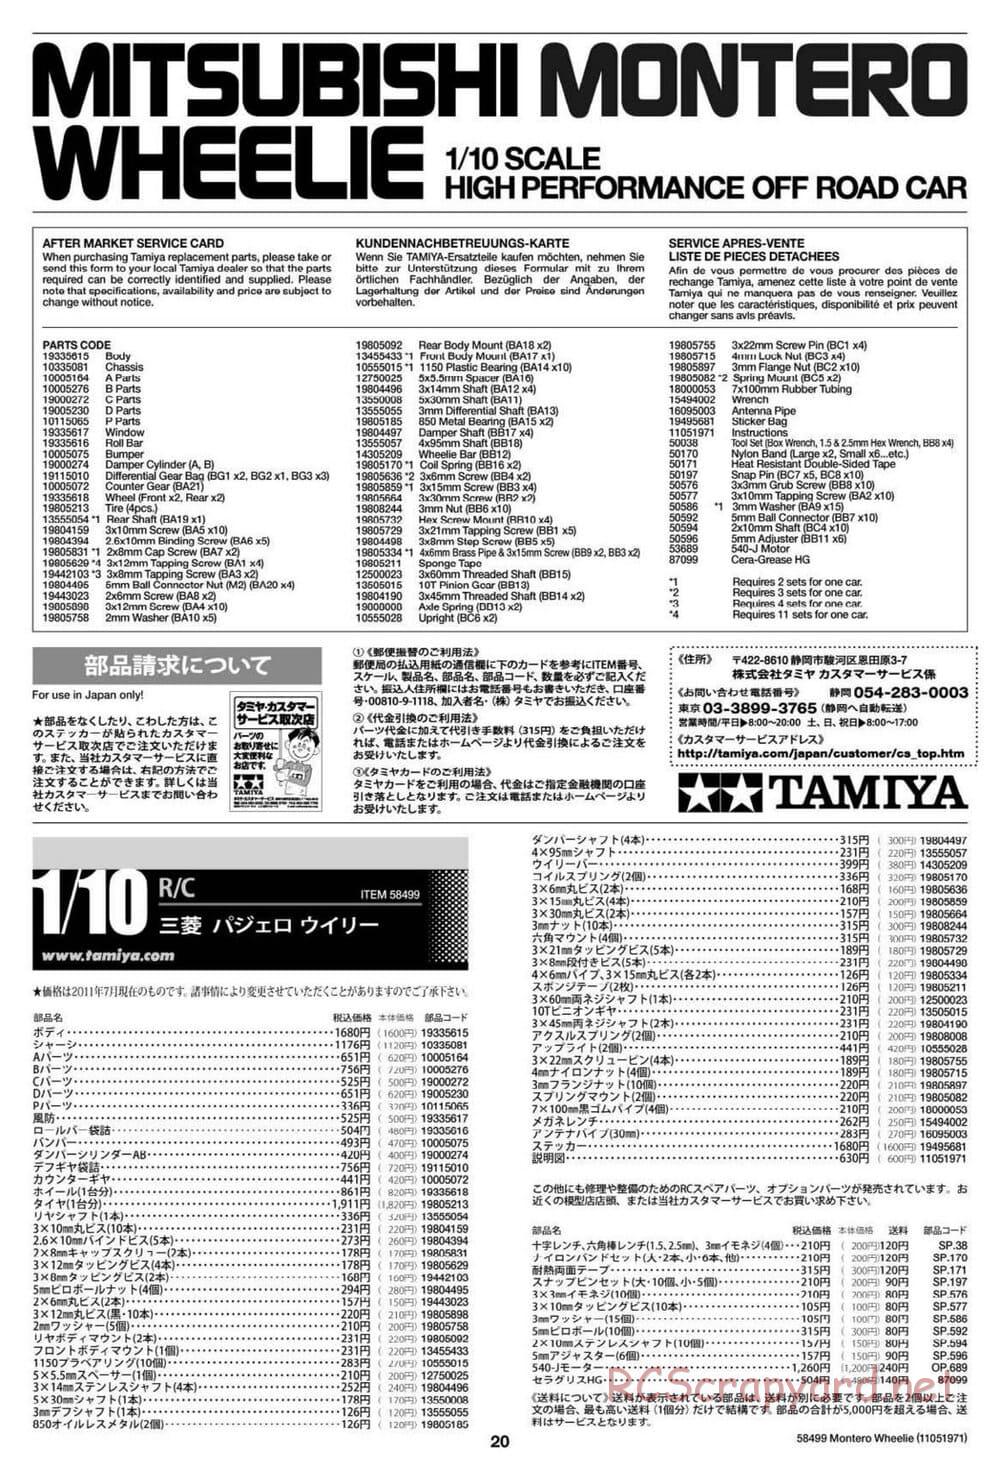 Tamiya - Mitsubishi Montero Wheelie - CW-01 Chassis - Manual - Page 20